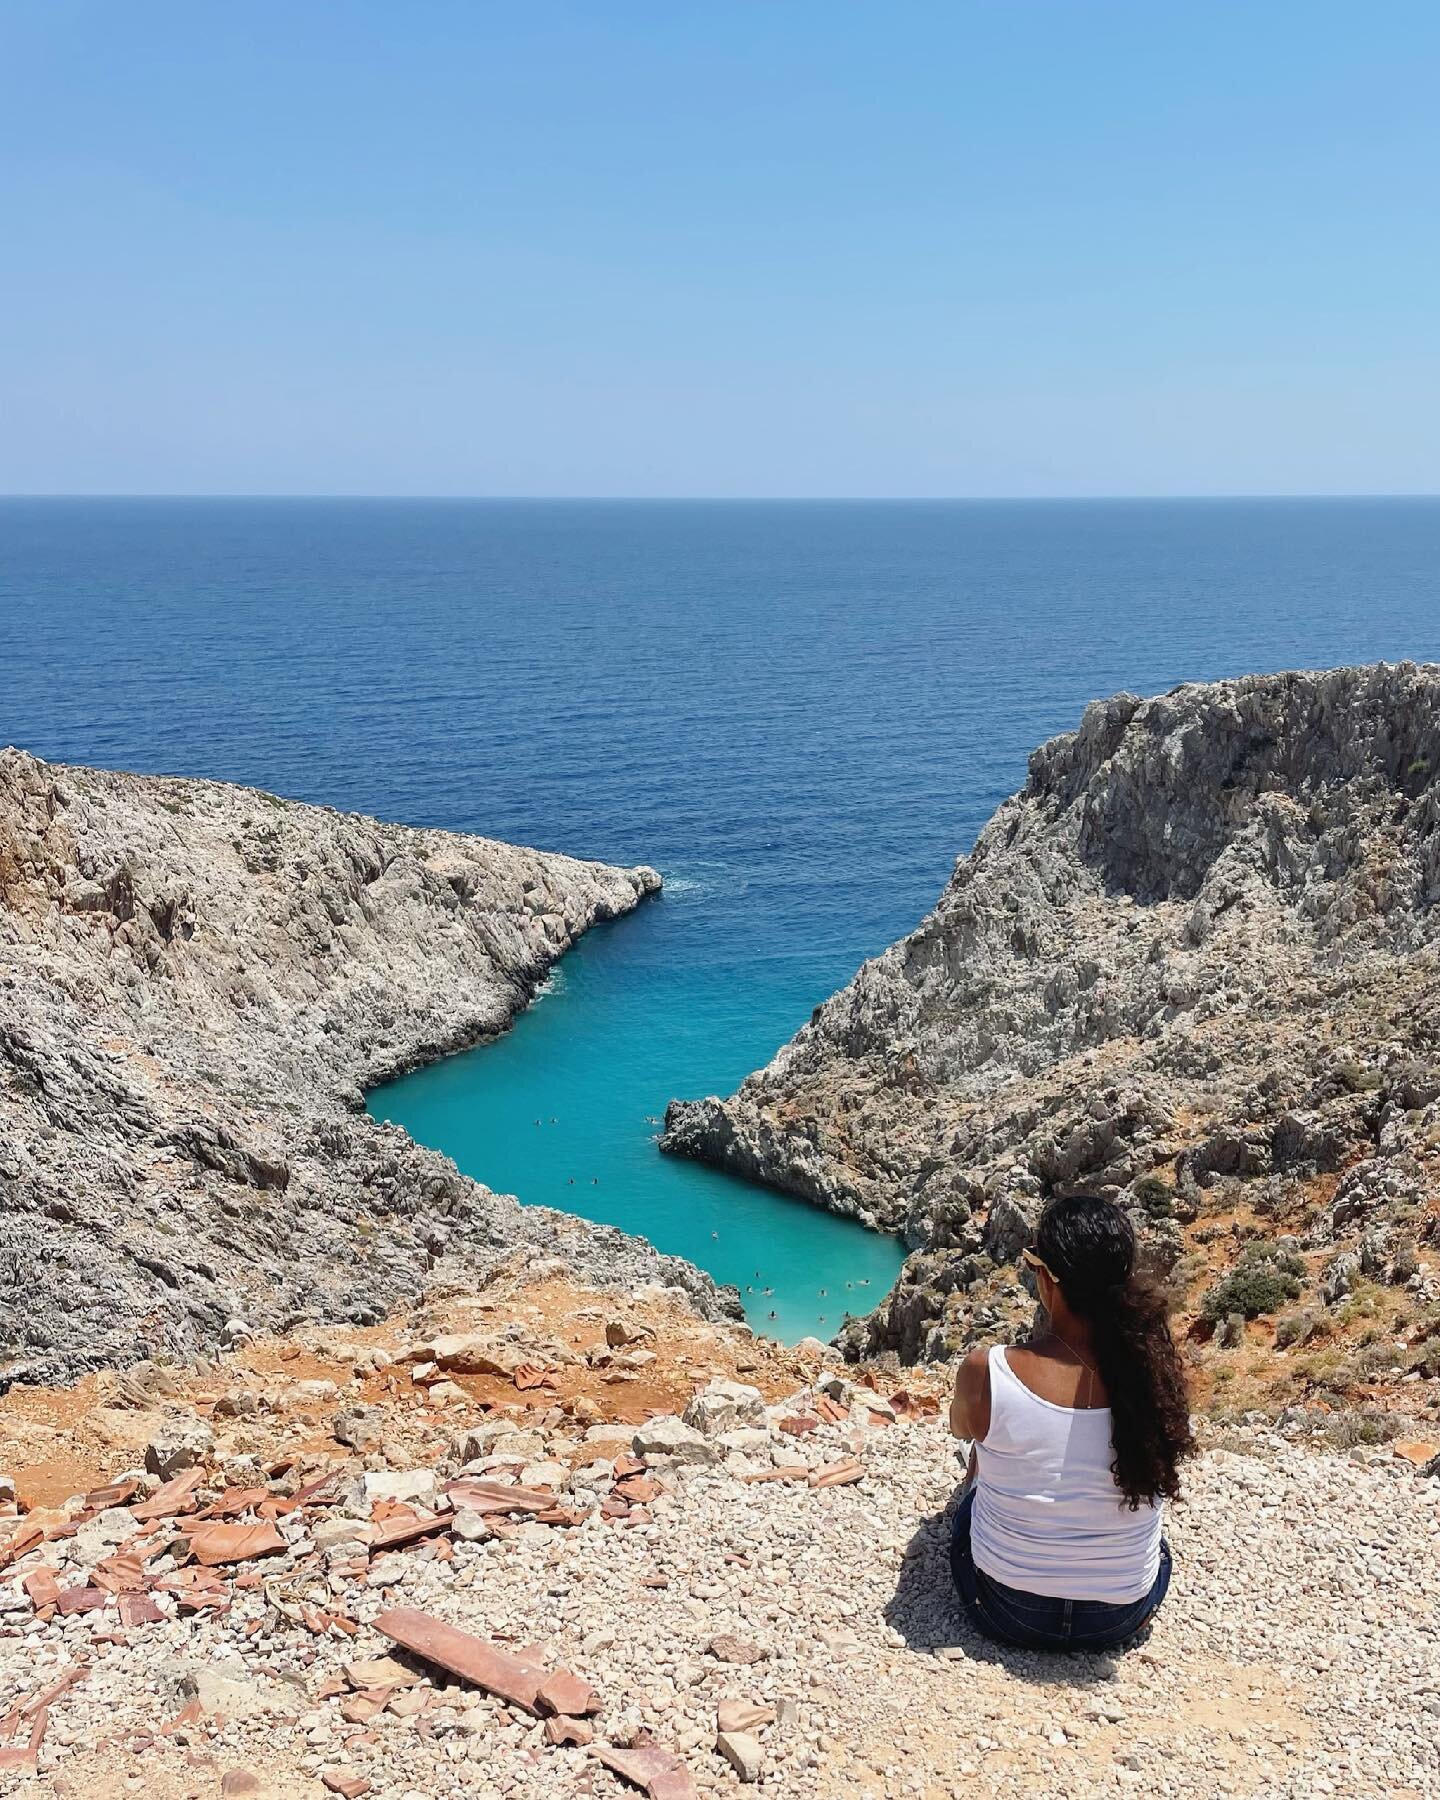 Difficult roads often lead to beautiful destinations. ⁠
⁠
⁠
⁠
⁠
⁠
⁠
#explorecrete #chania #seitanlimaniabeach #crete #visitcrete #cretebeaches #greecevacation #traveldesigner #travelexperience #bespoketravel #authenticexperiences #luxurytraveladvisor